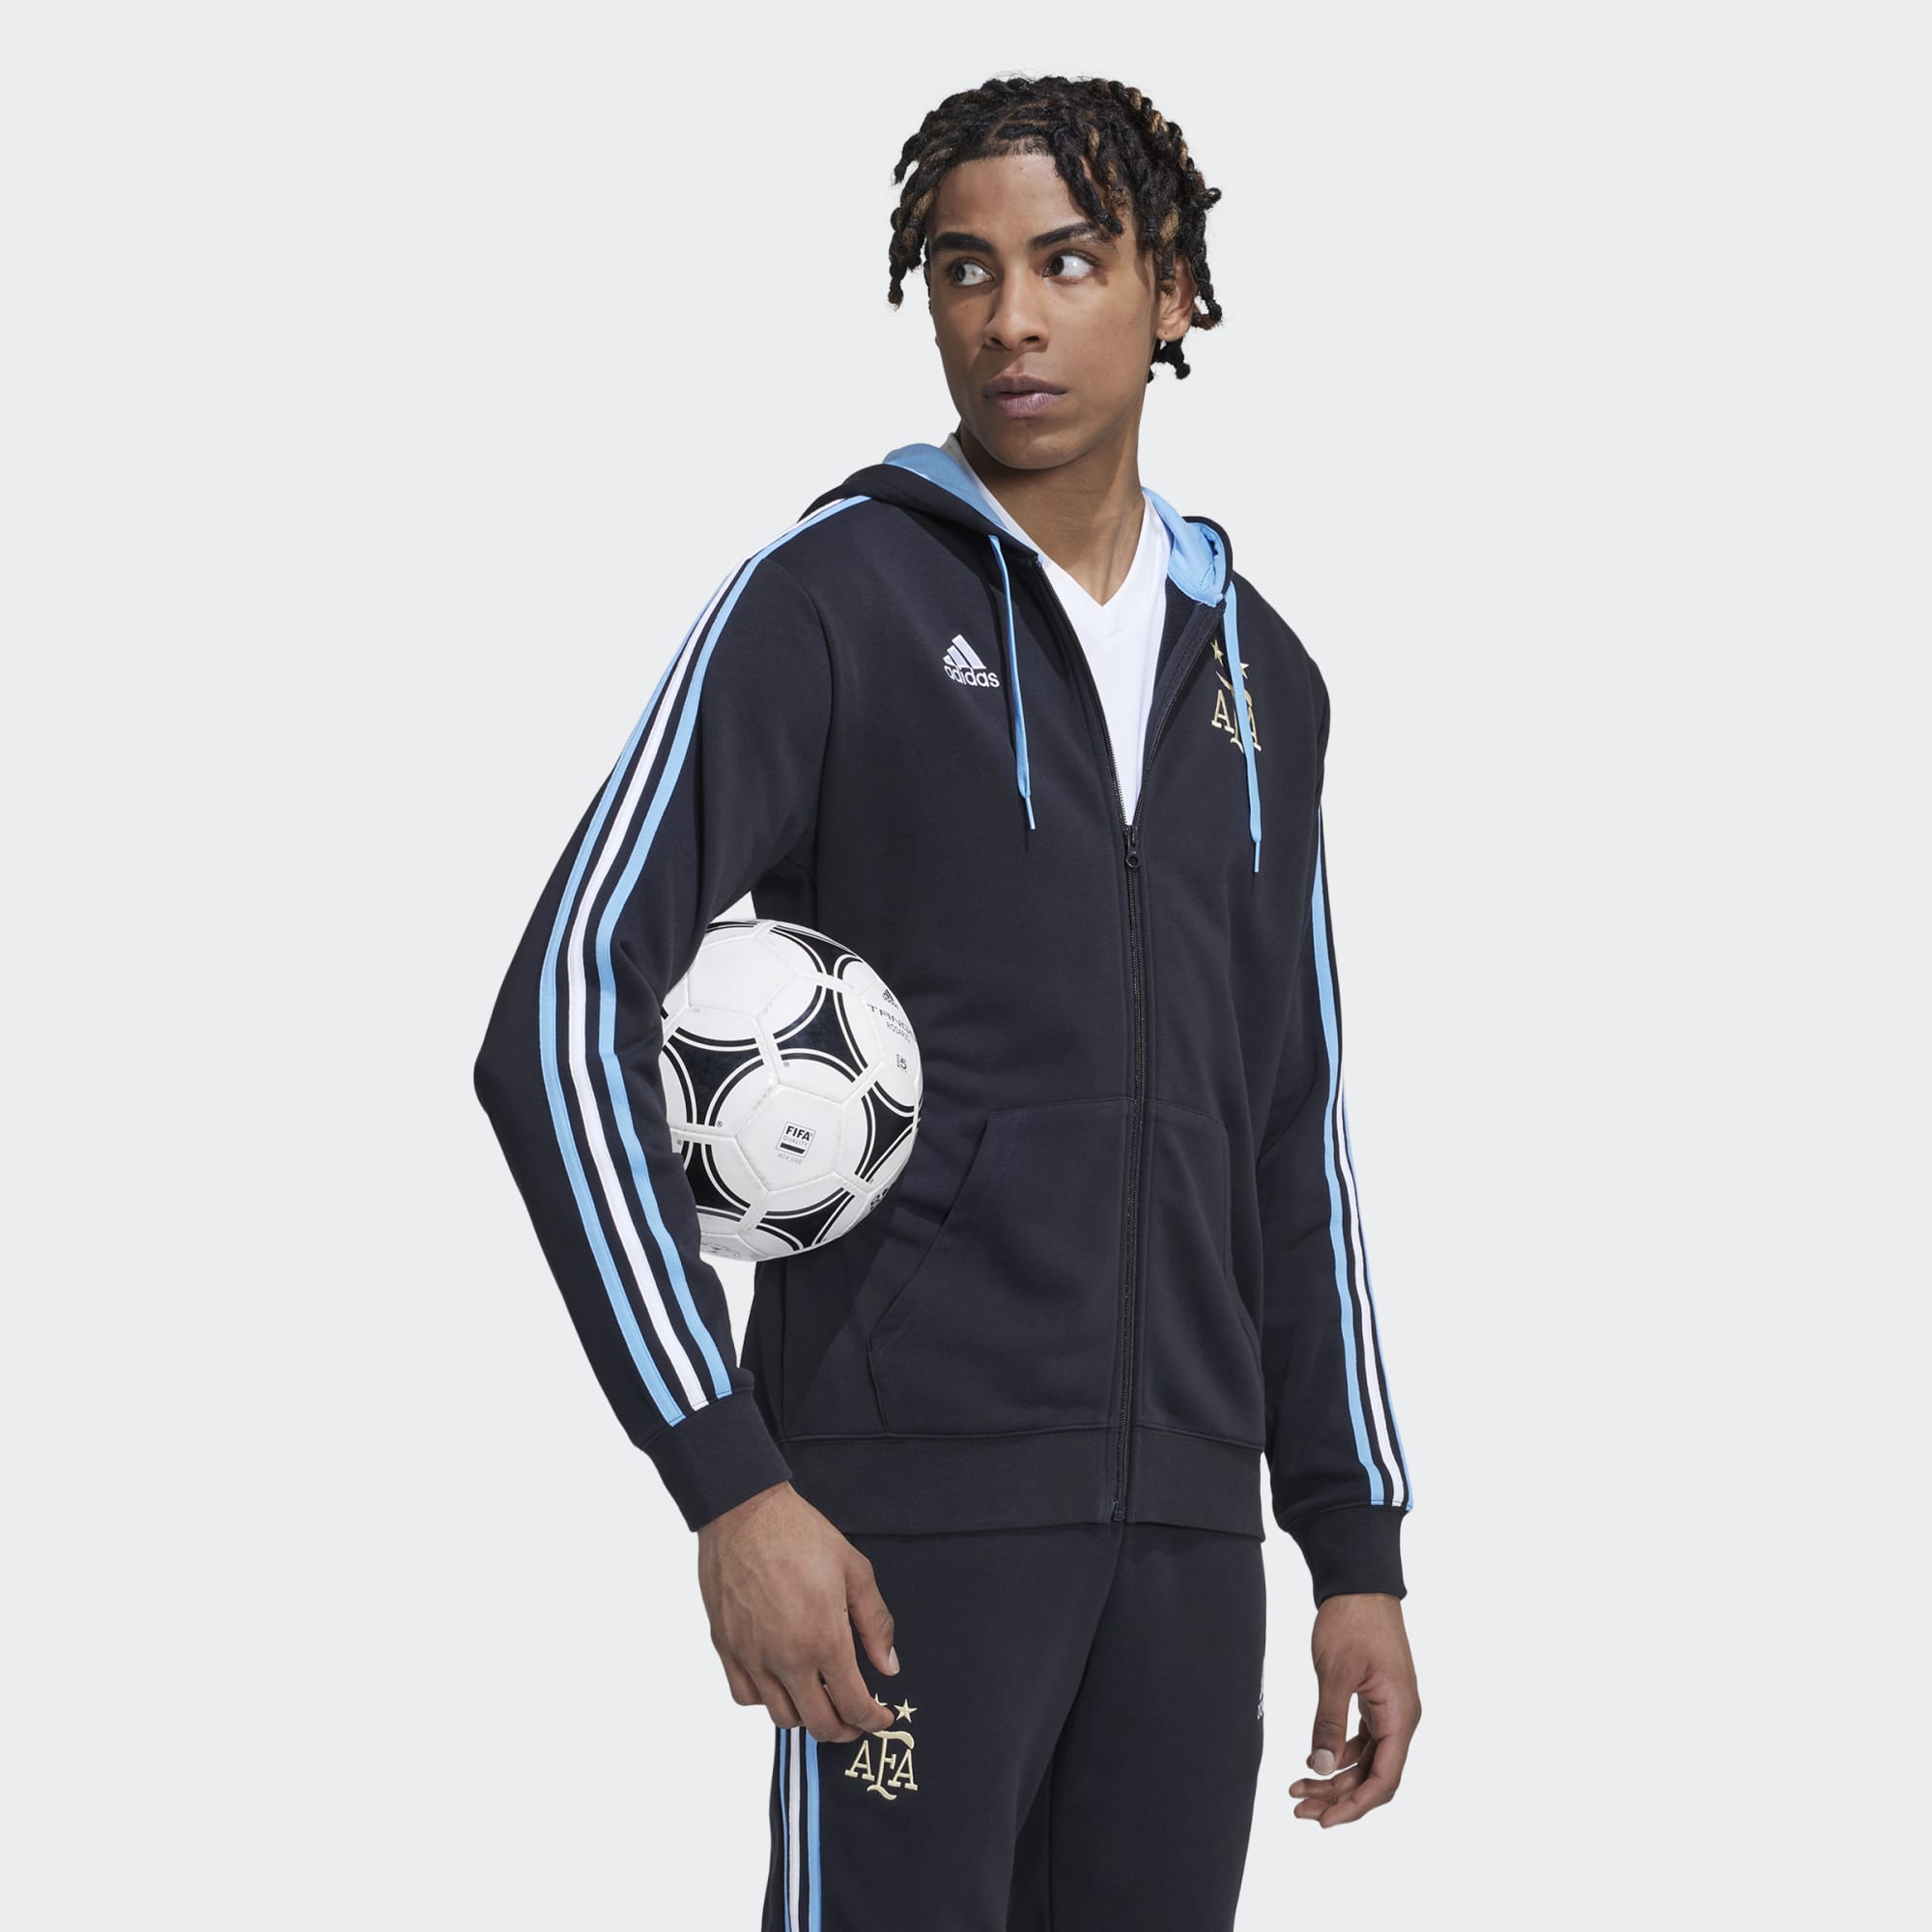 argentina soccer jersey zip,